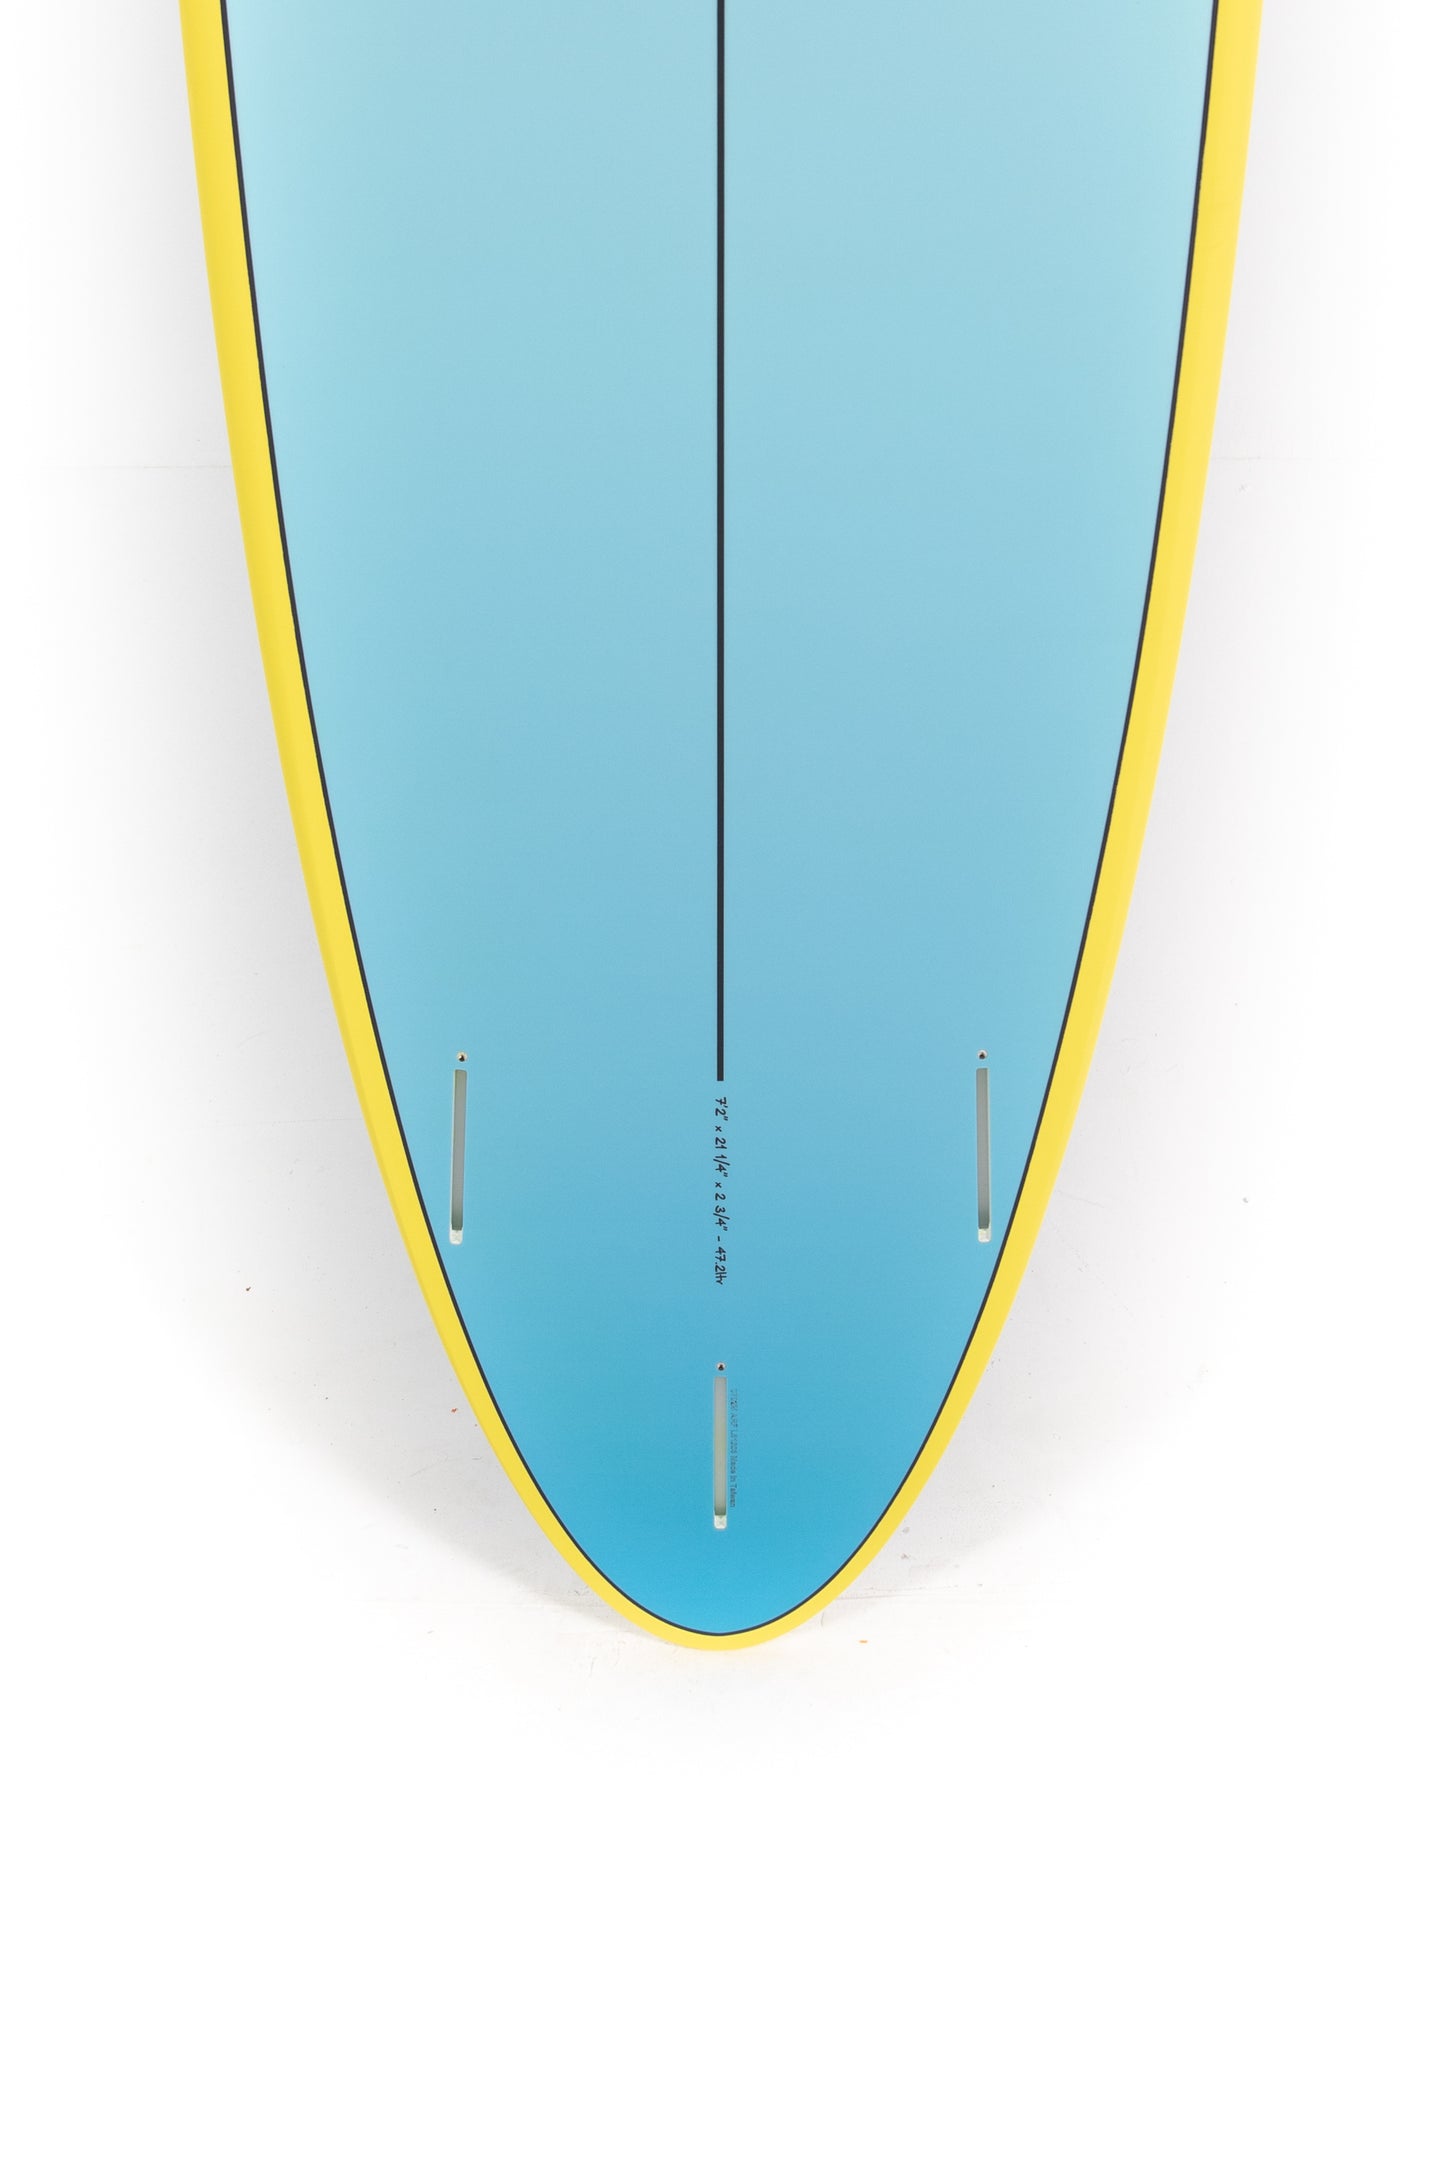 
                  
                    Pukas-Surf-Shop-Torq-Surfboards-Fun-7_2
                  
                